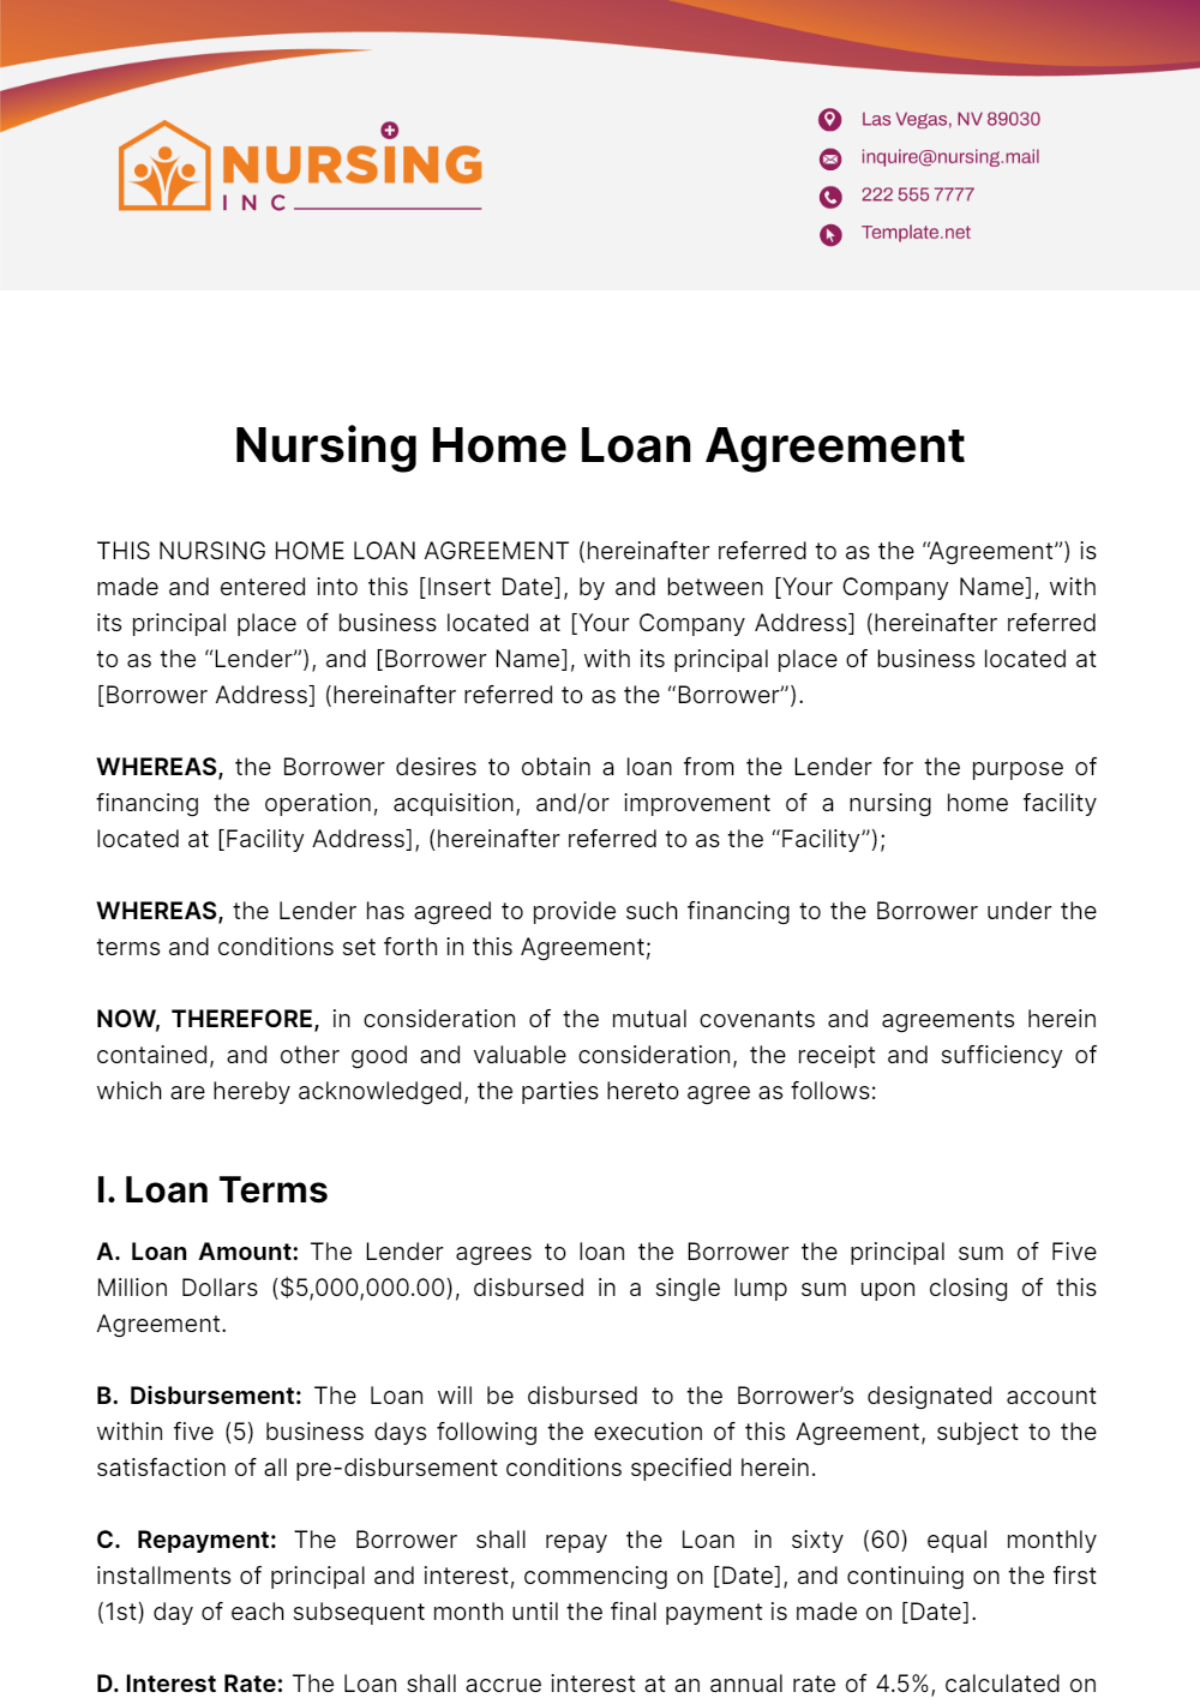 Nursing Home Loan Agreement Template